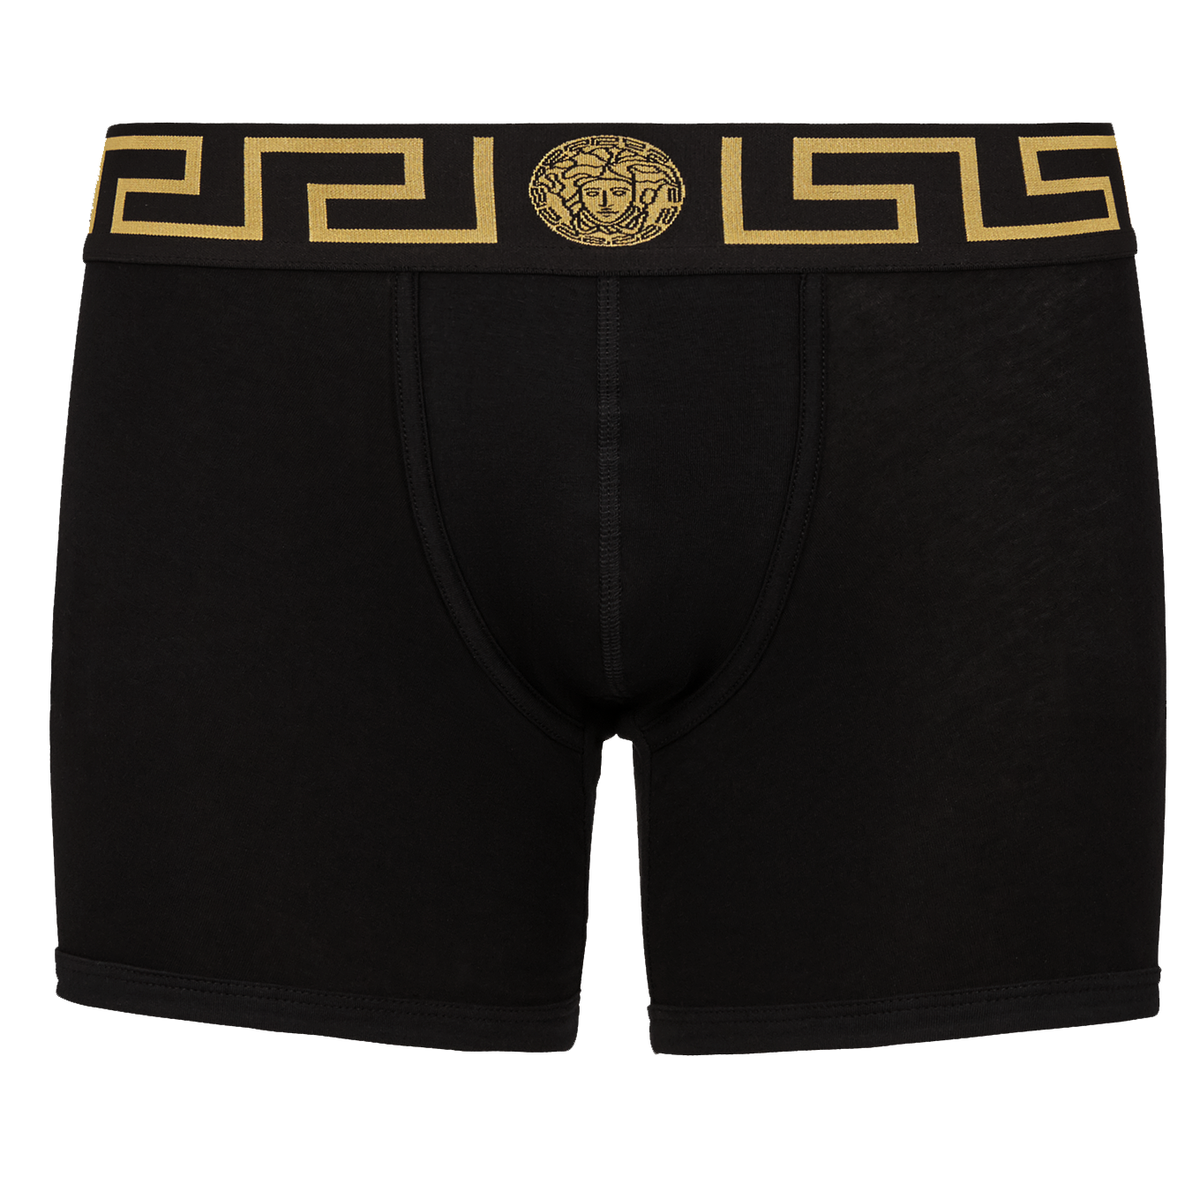 Versace Underwear Long Trunk W/Greca Border - Black/Gold - PureAtlanta.com